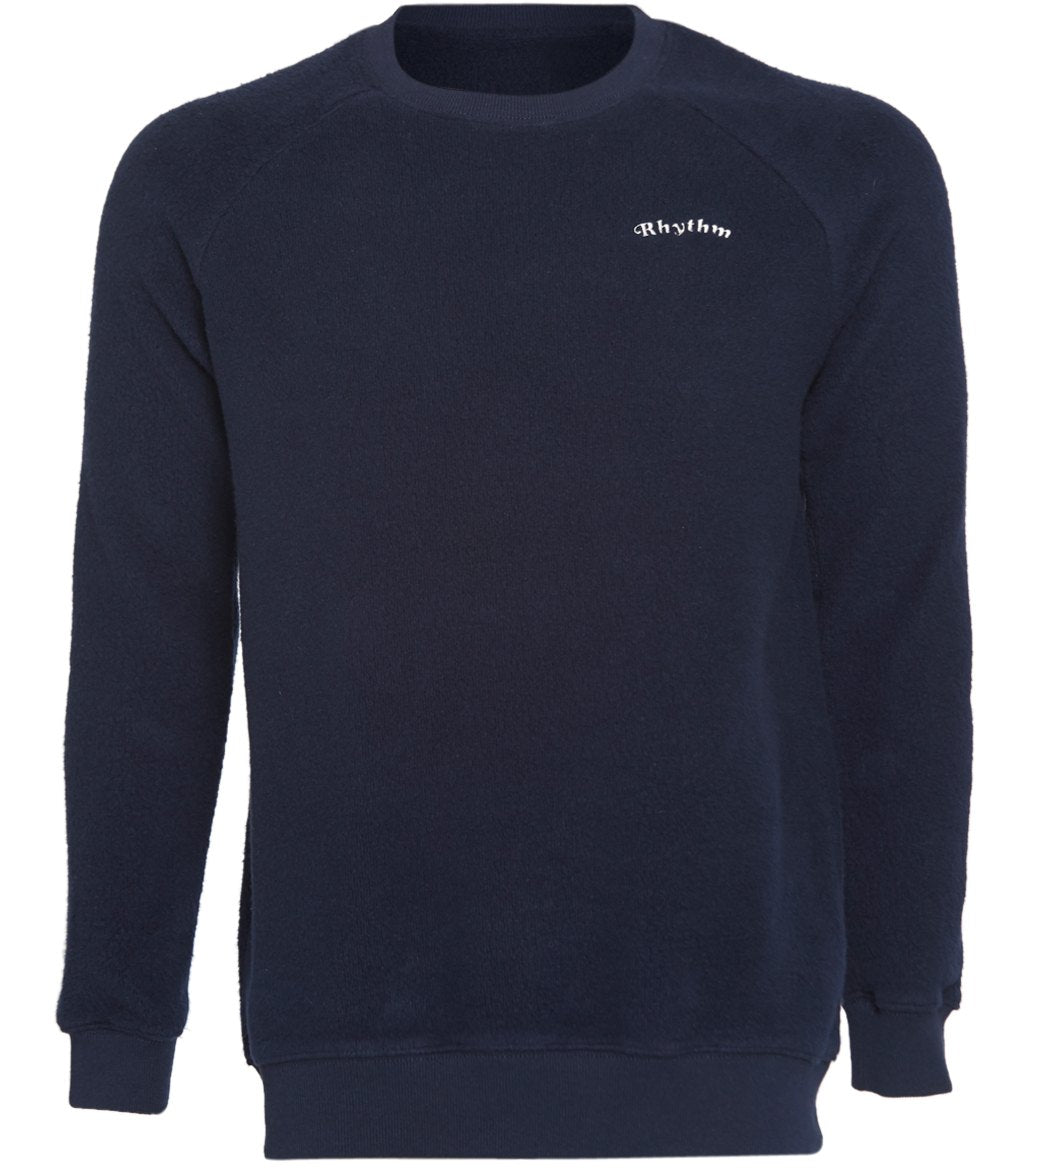 Rhythm Vintage Pullover Sweater Shirt - Navy Medium Cotton - Swimoutlet.com